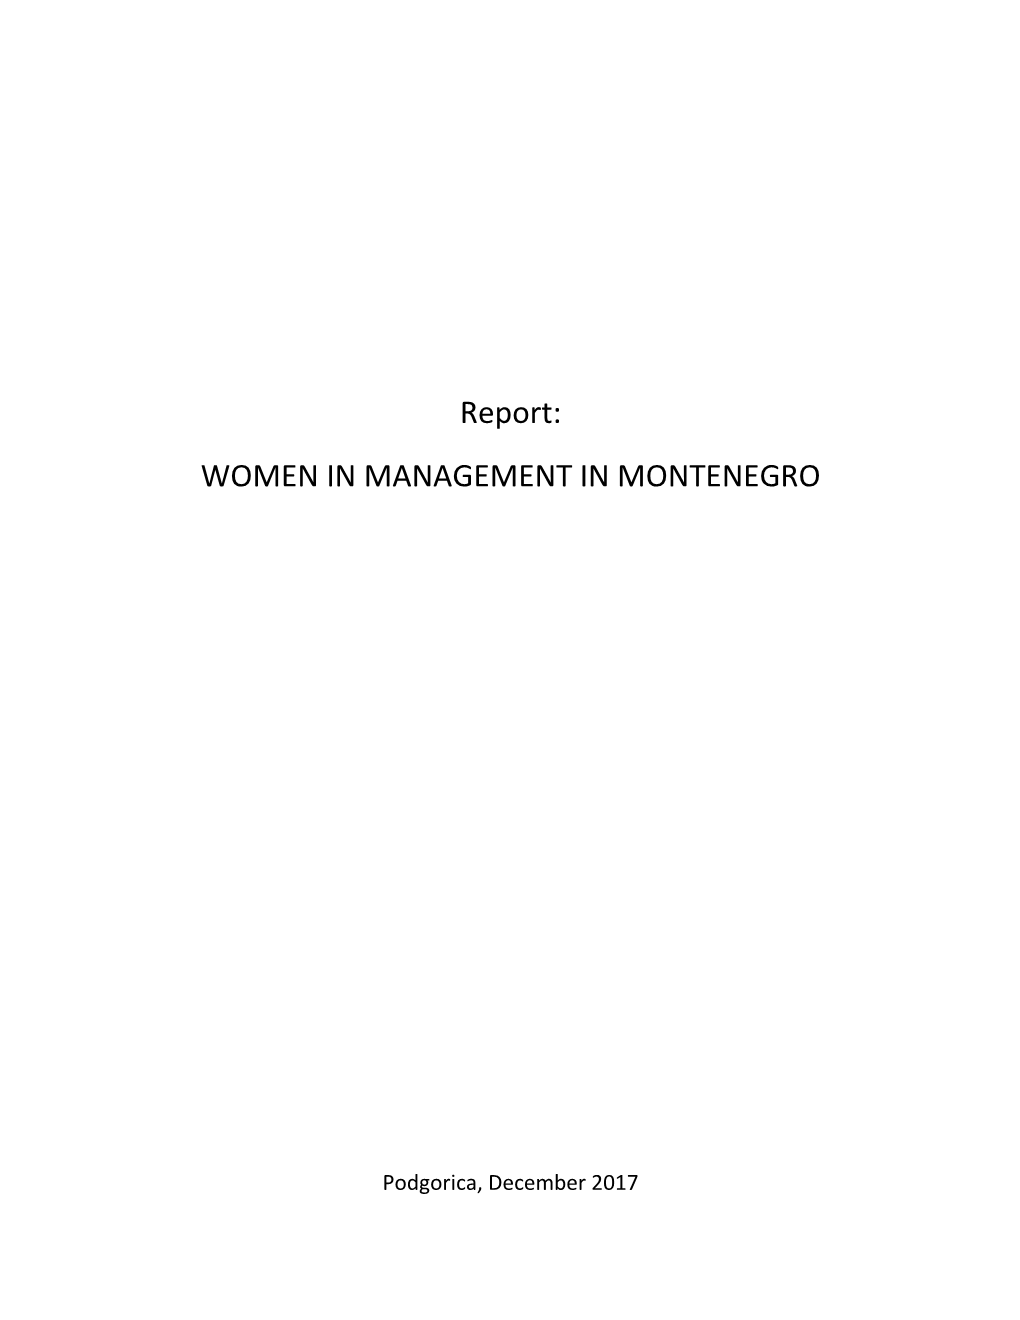 Women in Management in Montenegro.Pdf